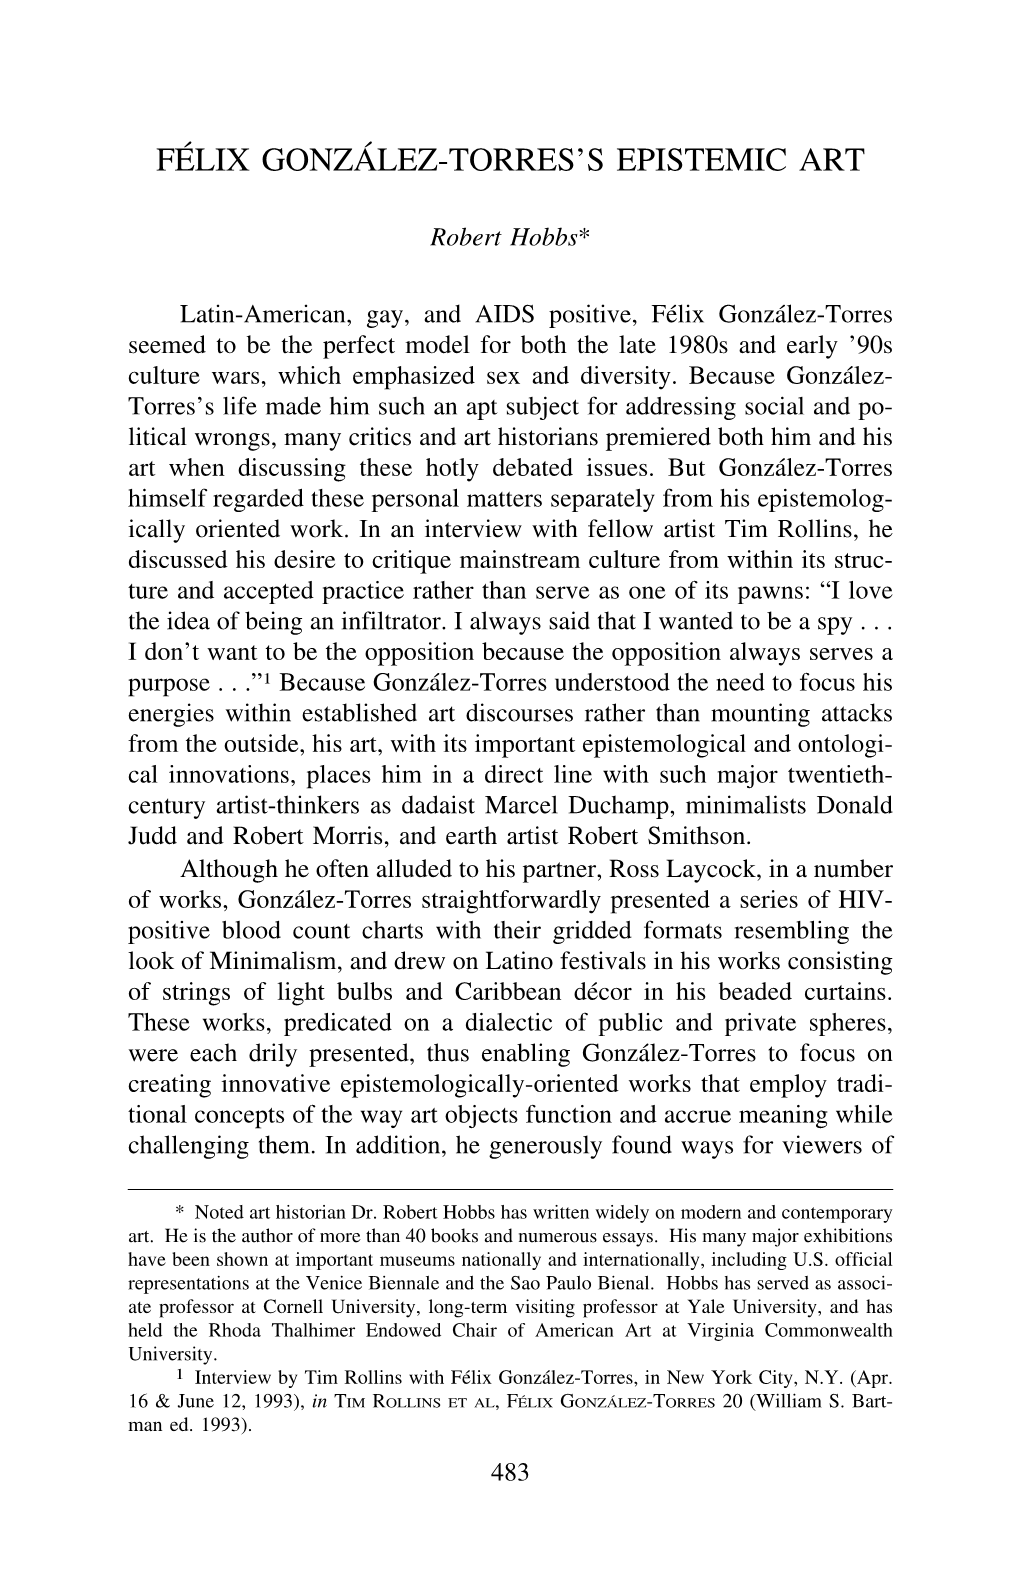 Felix Gonzalez-Torres's Epistemic